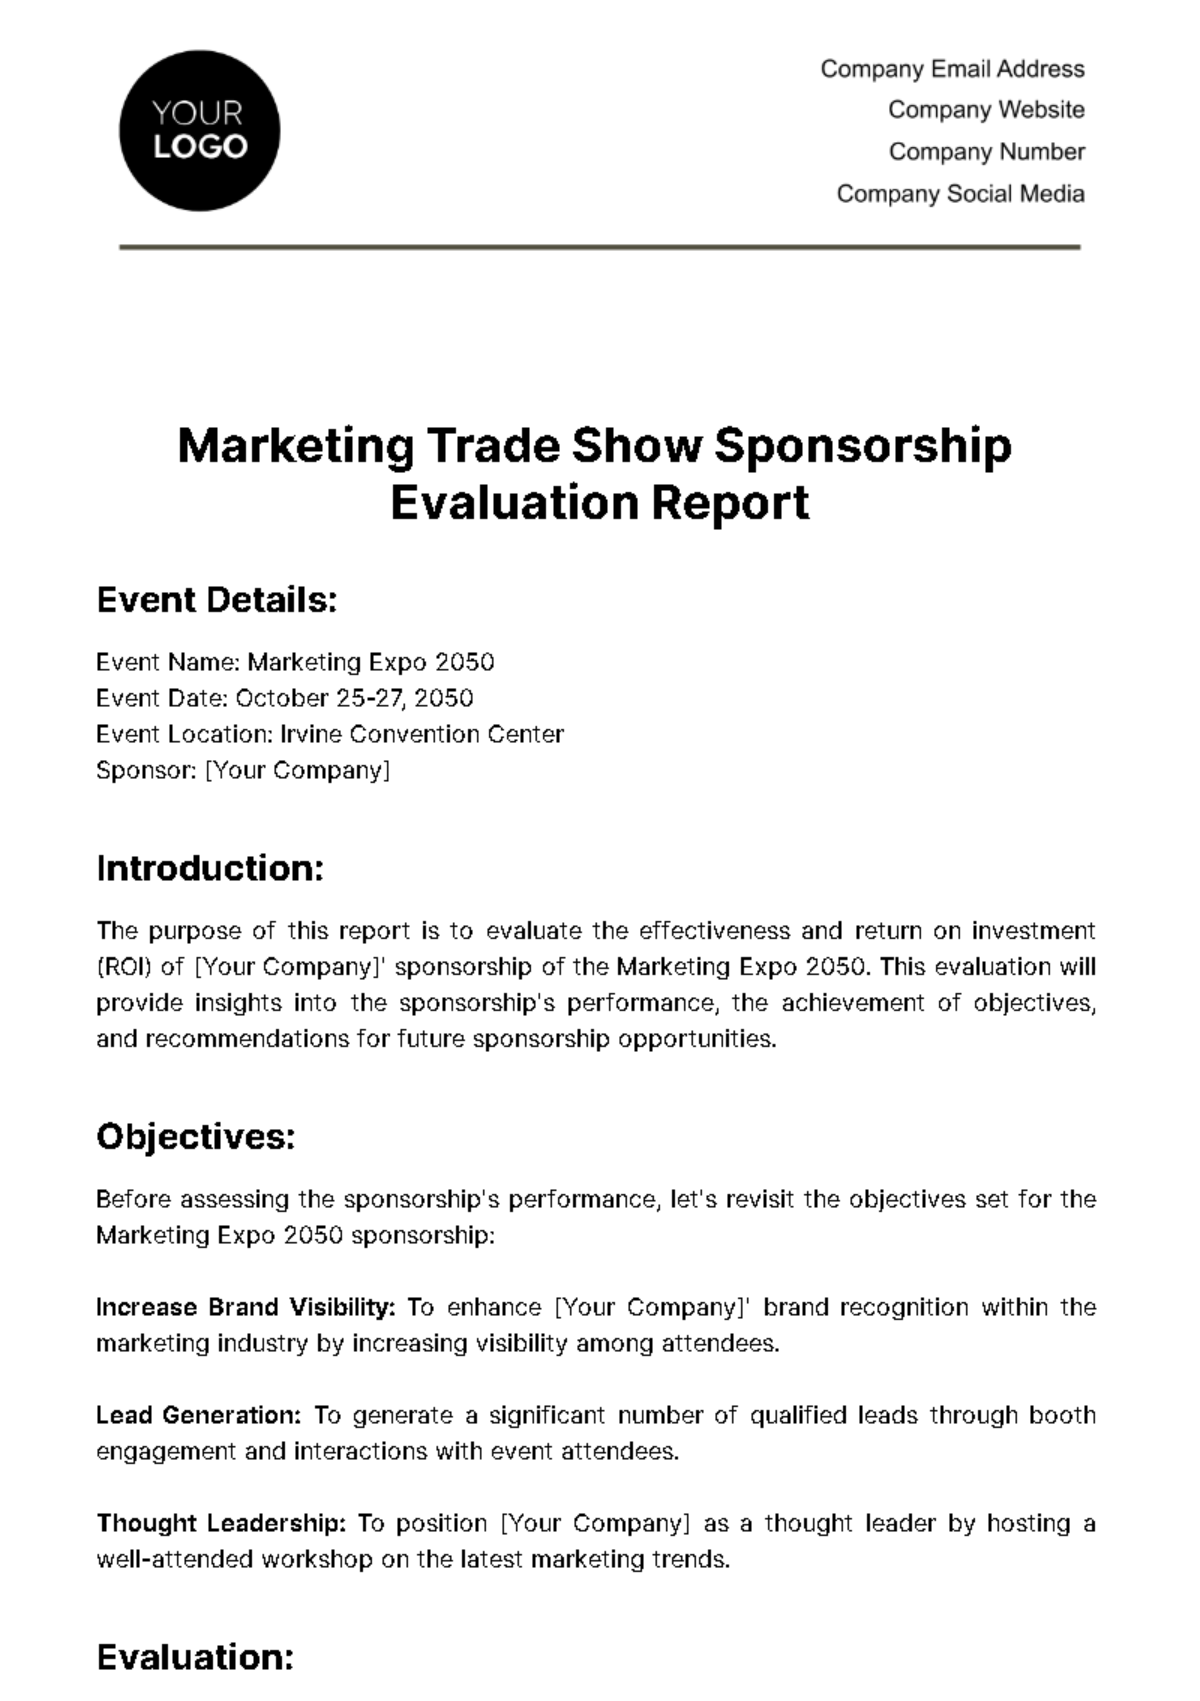 Marketing Trade Show Sponsorship Evaluation Template